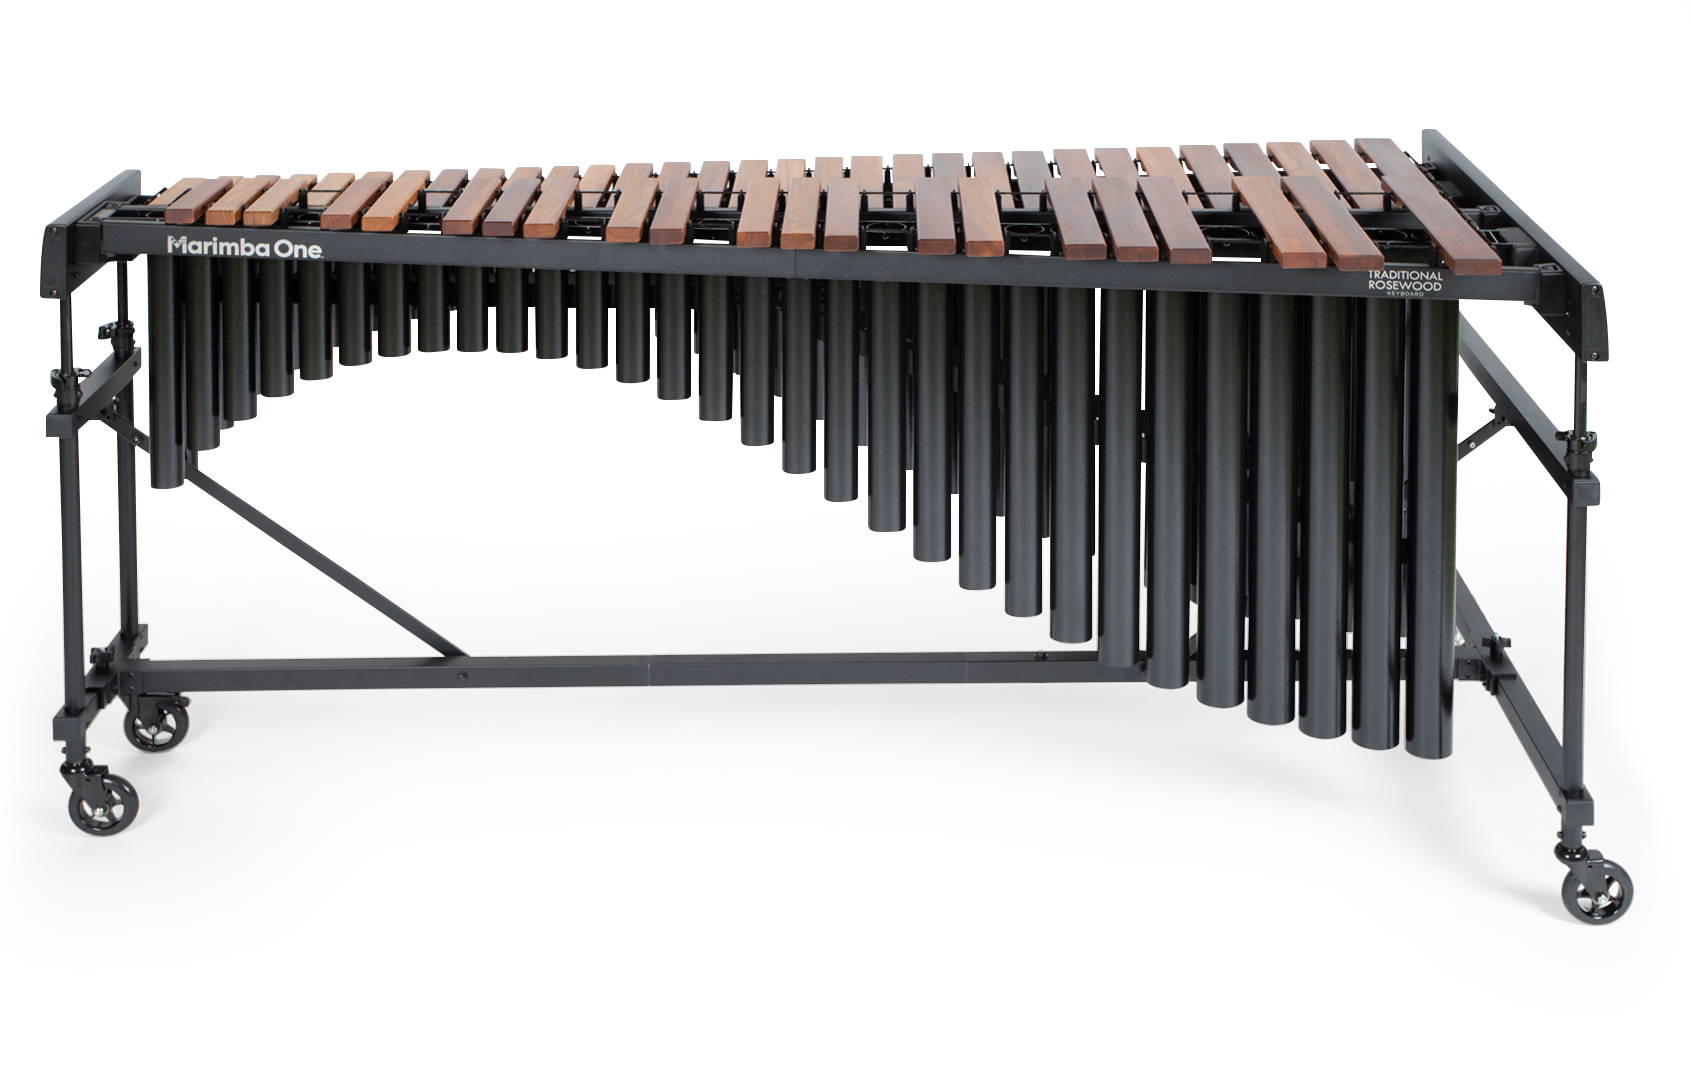 #E8301 Marimba One 4.3 Octave Educational Series Marimba with Classic Resonators, Traditional Rosewood Keyboard 4.3個八度、經典共鳴管、傳統琴鍵、玫瑰木